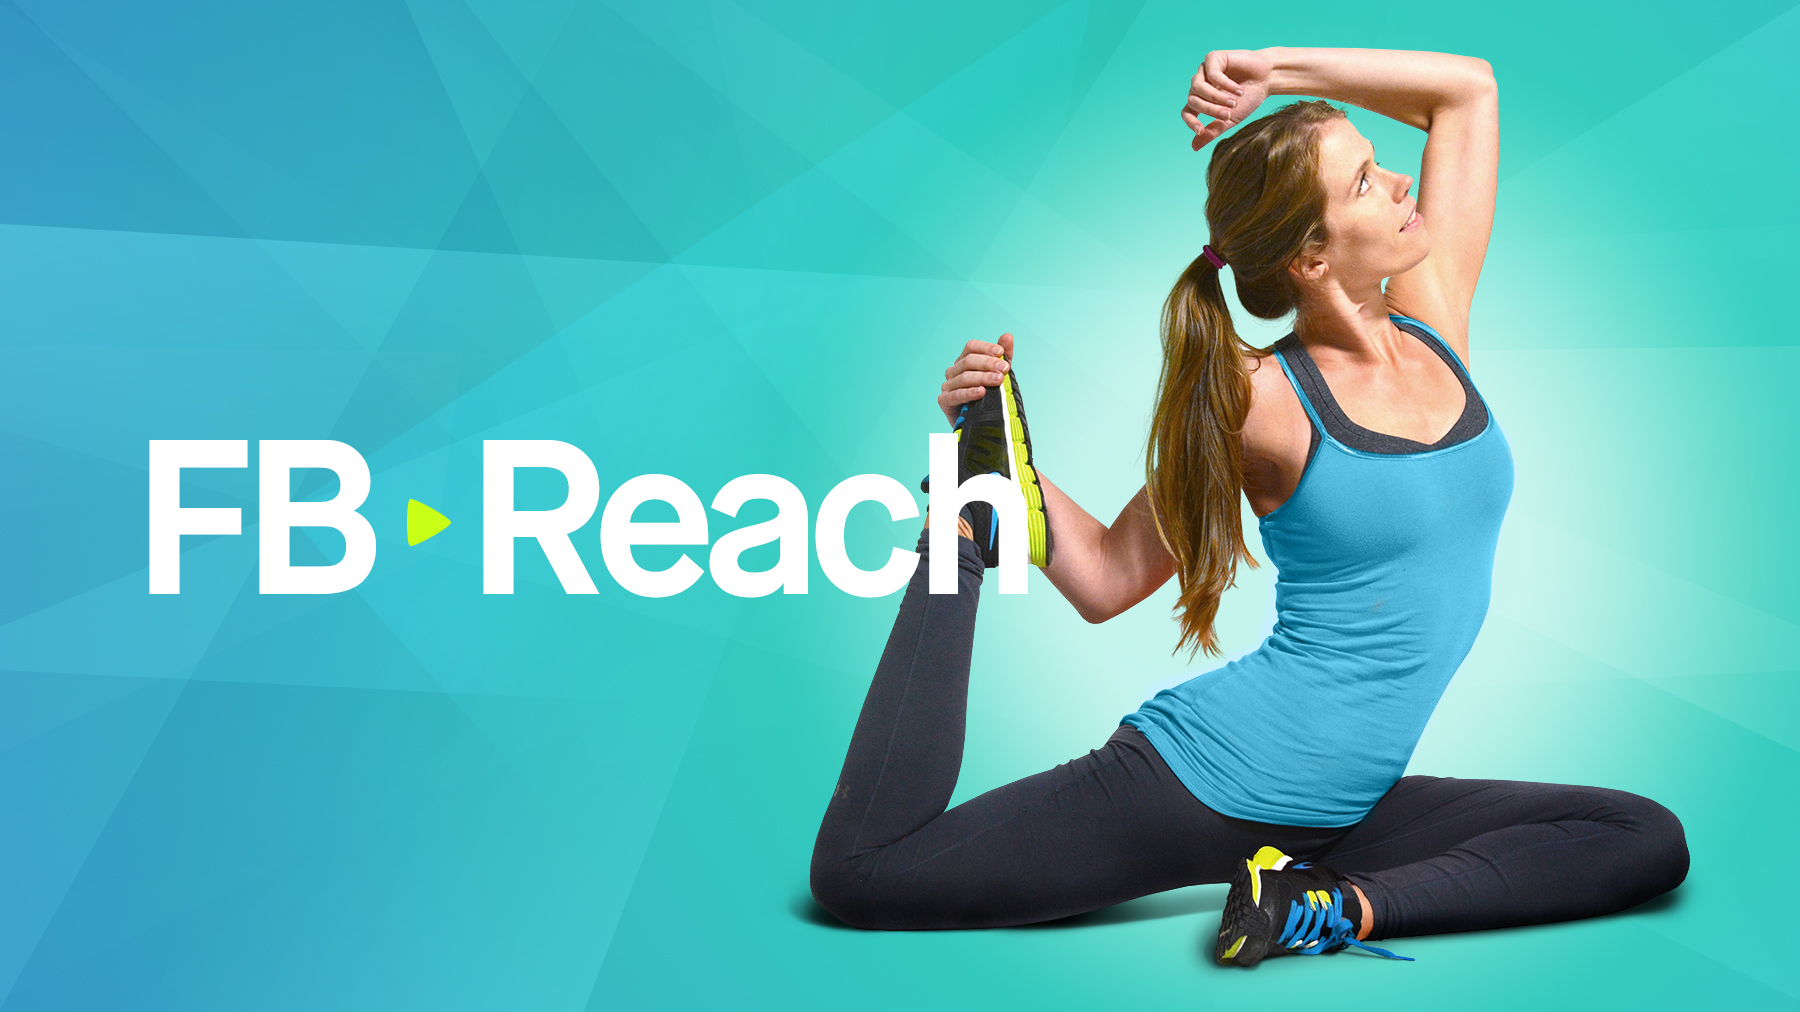 FB Reach - Stretching, Yoga, & Pilates Program for Flexibility & Total Body  Toning